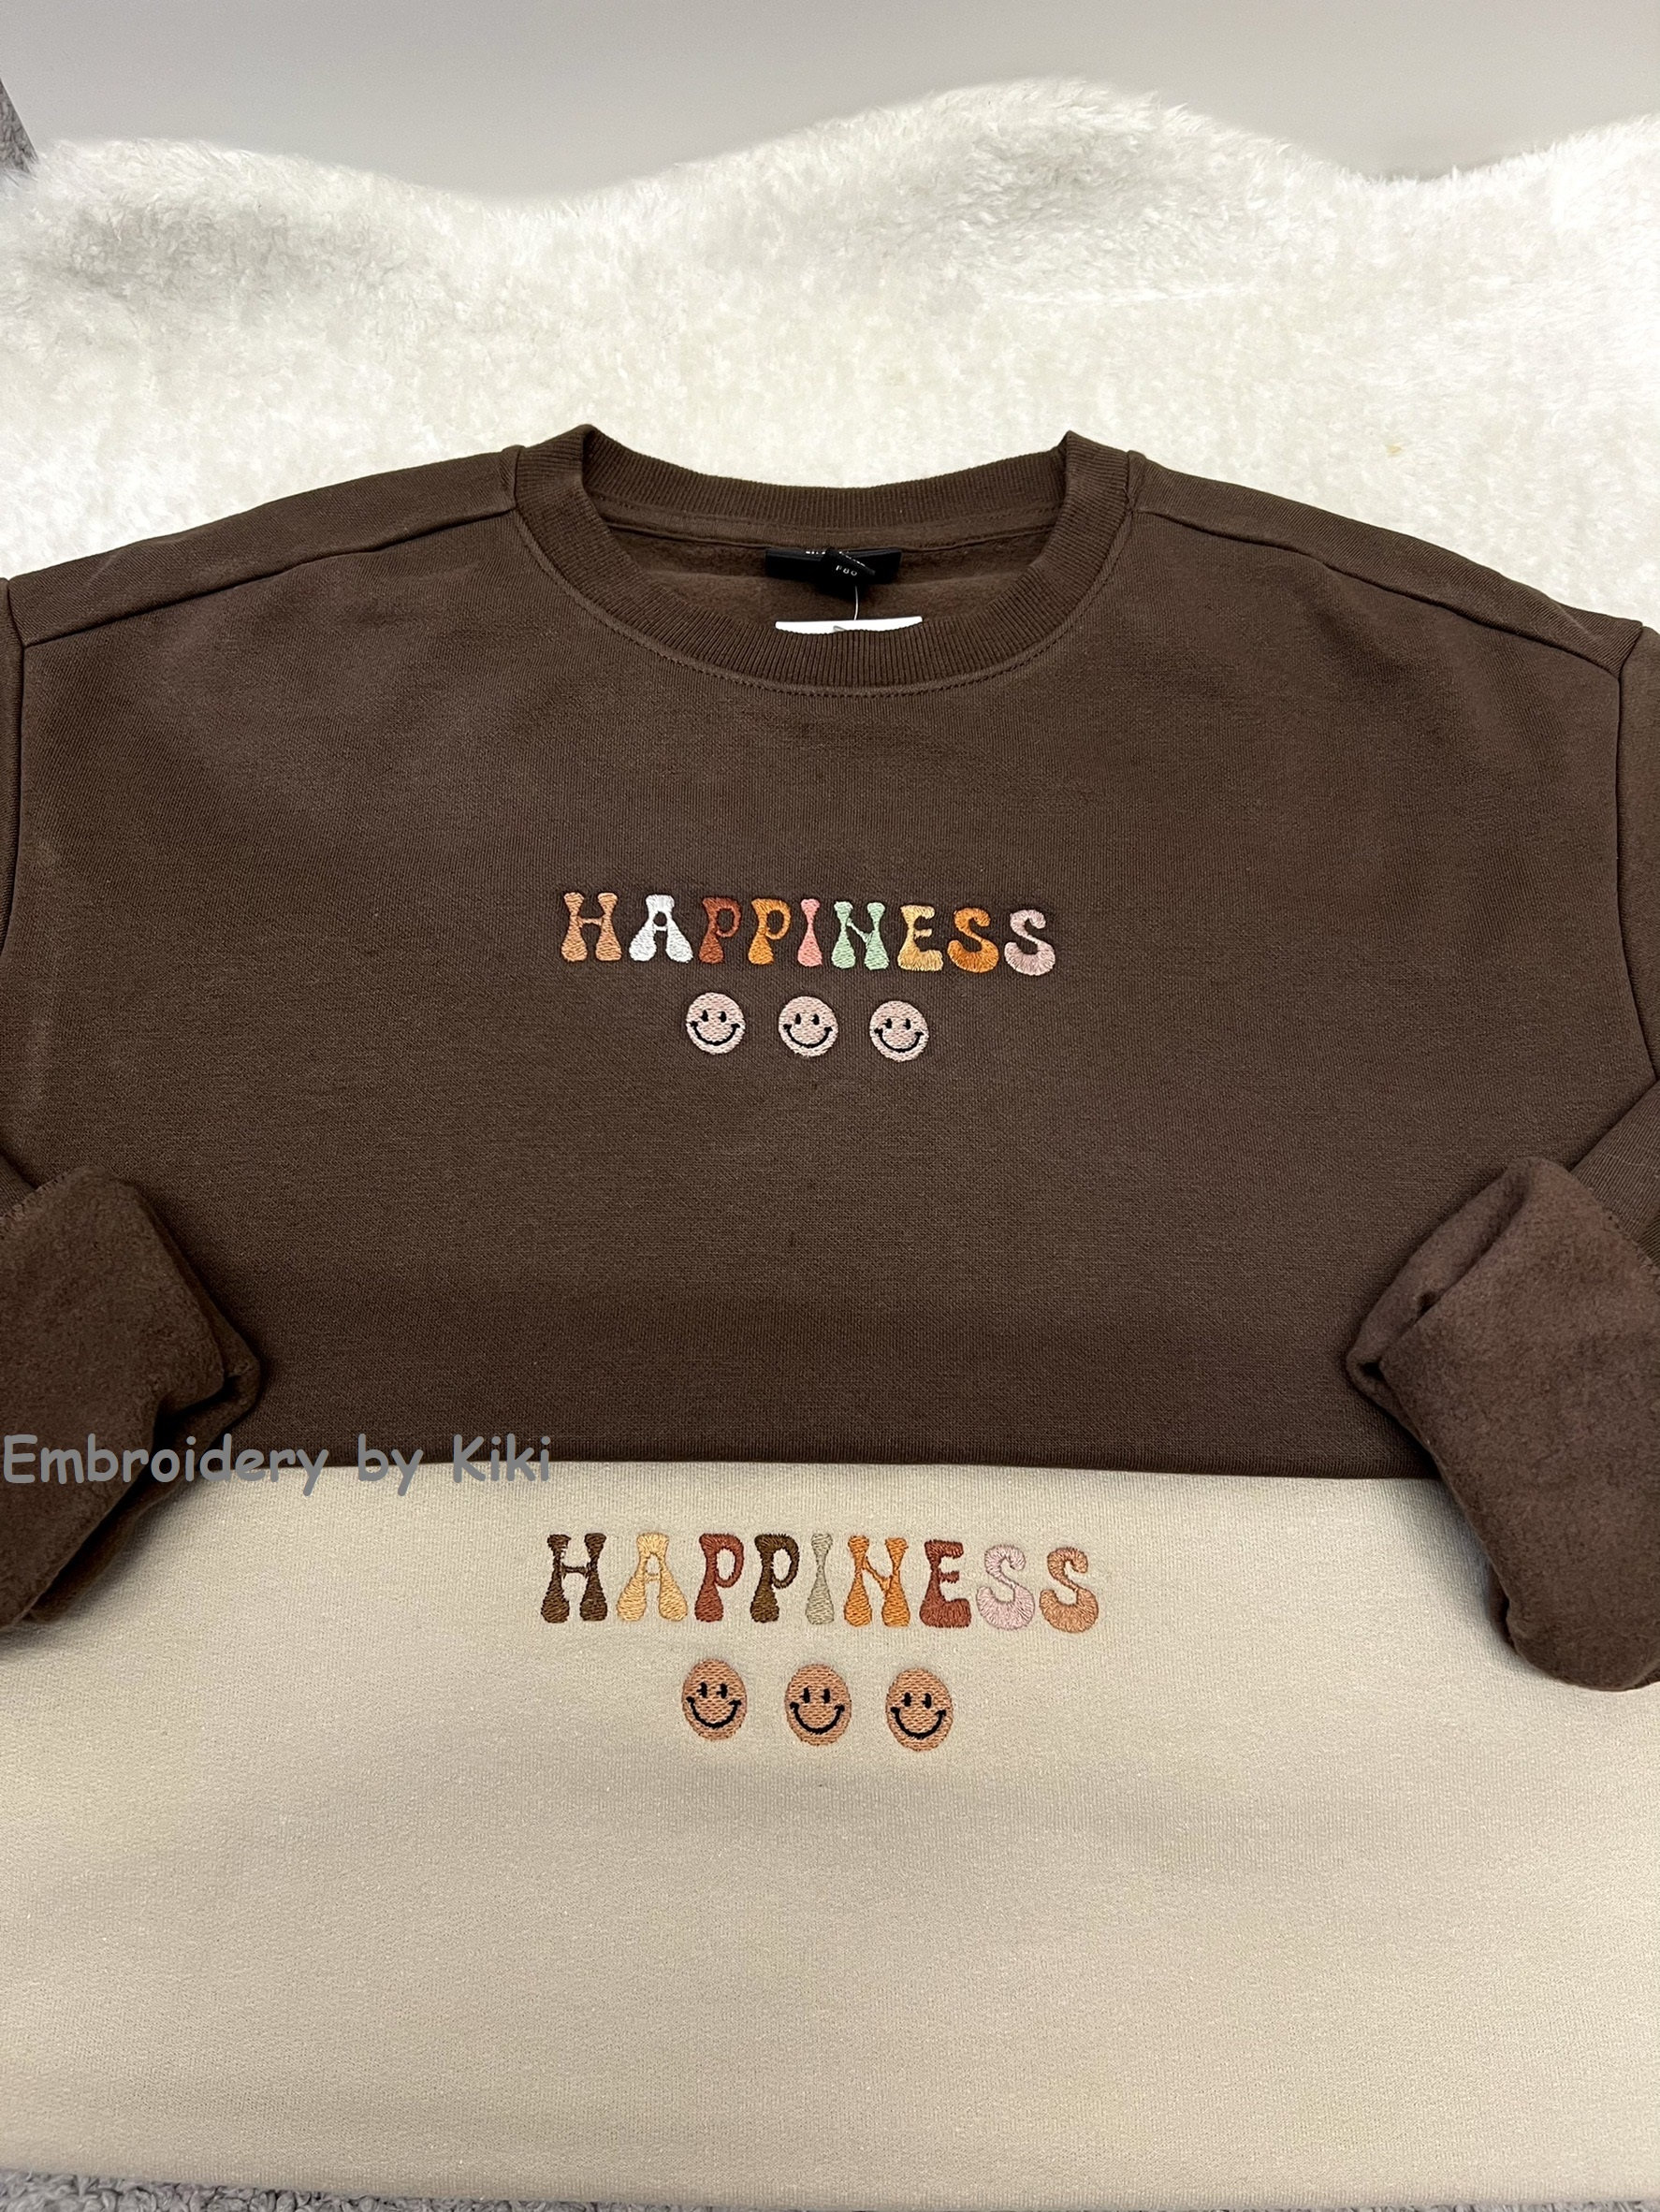 happiness sewing thread Spools' Unisex Crewneck Sweatshirt